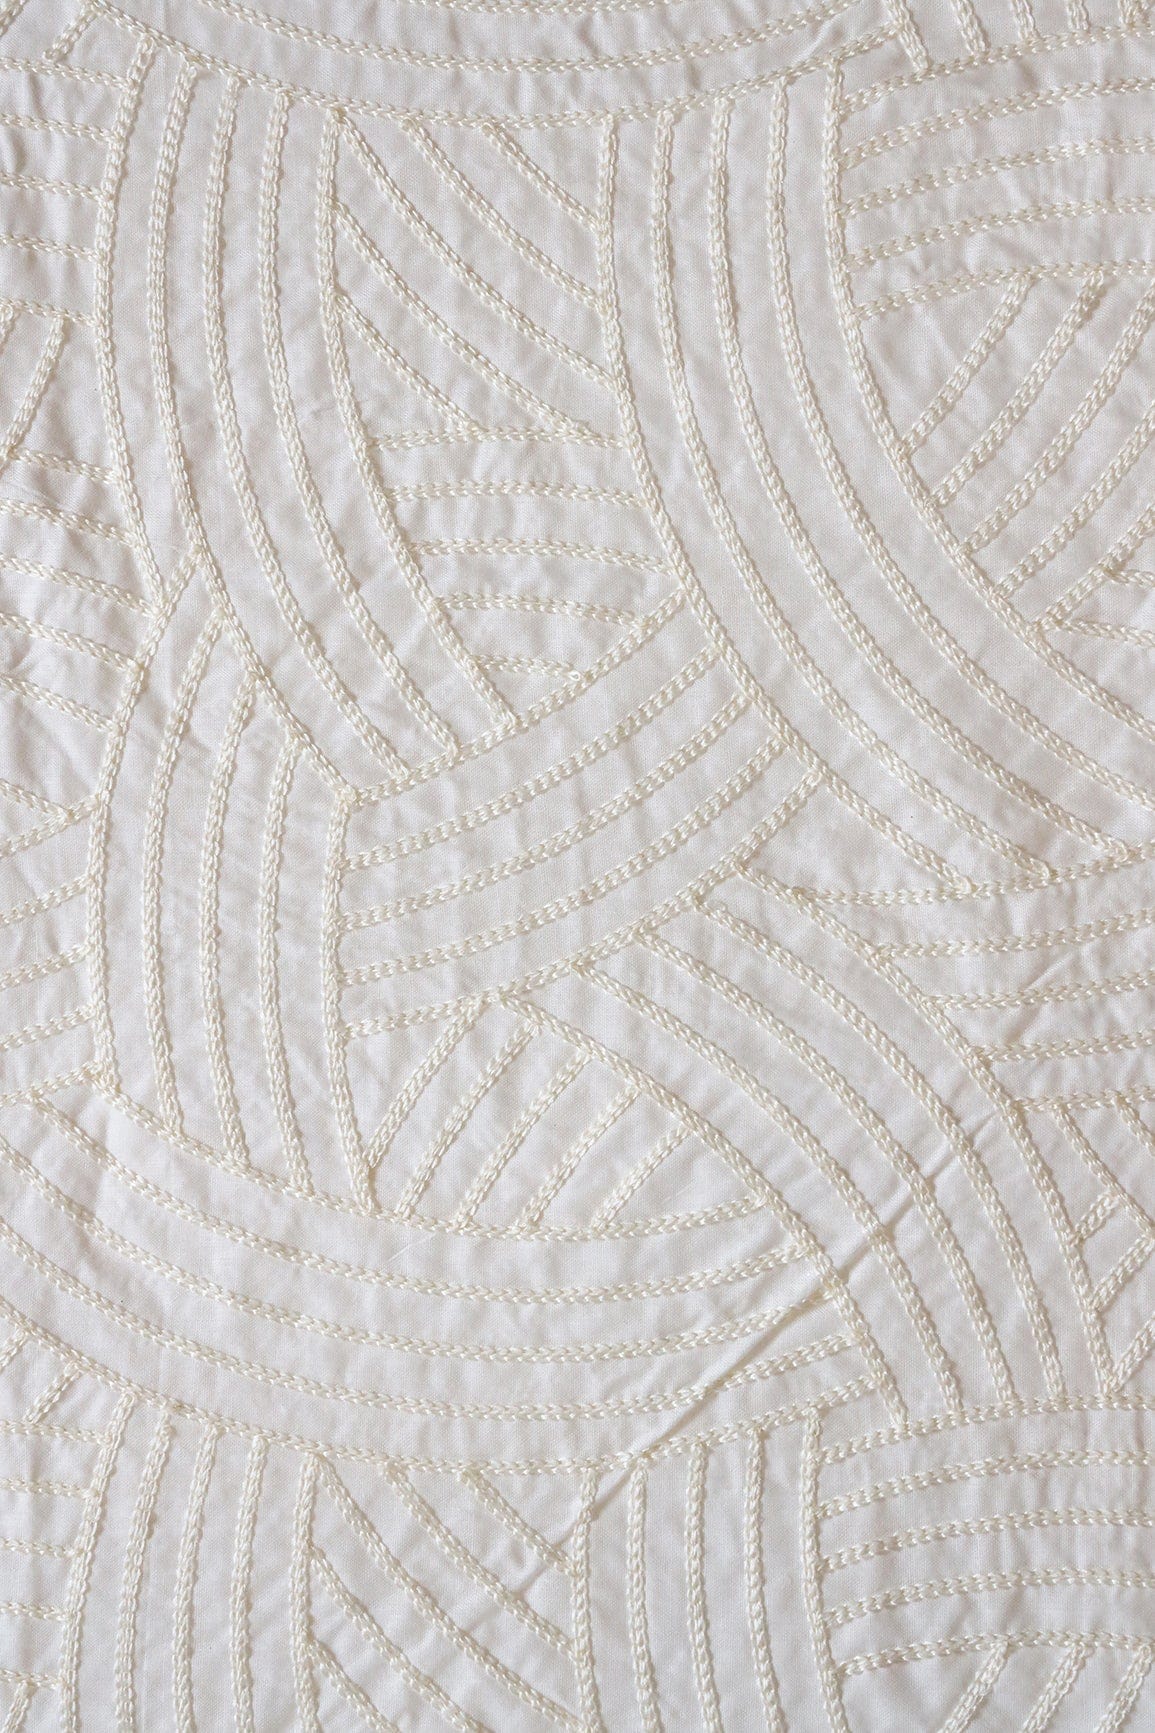 doeraa Embroidery Fabrics Cream Thread Geometric Pattern Heavy Embroidery Work On White Cotton Fabric